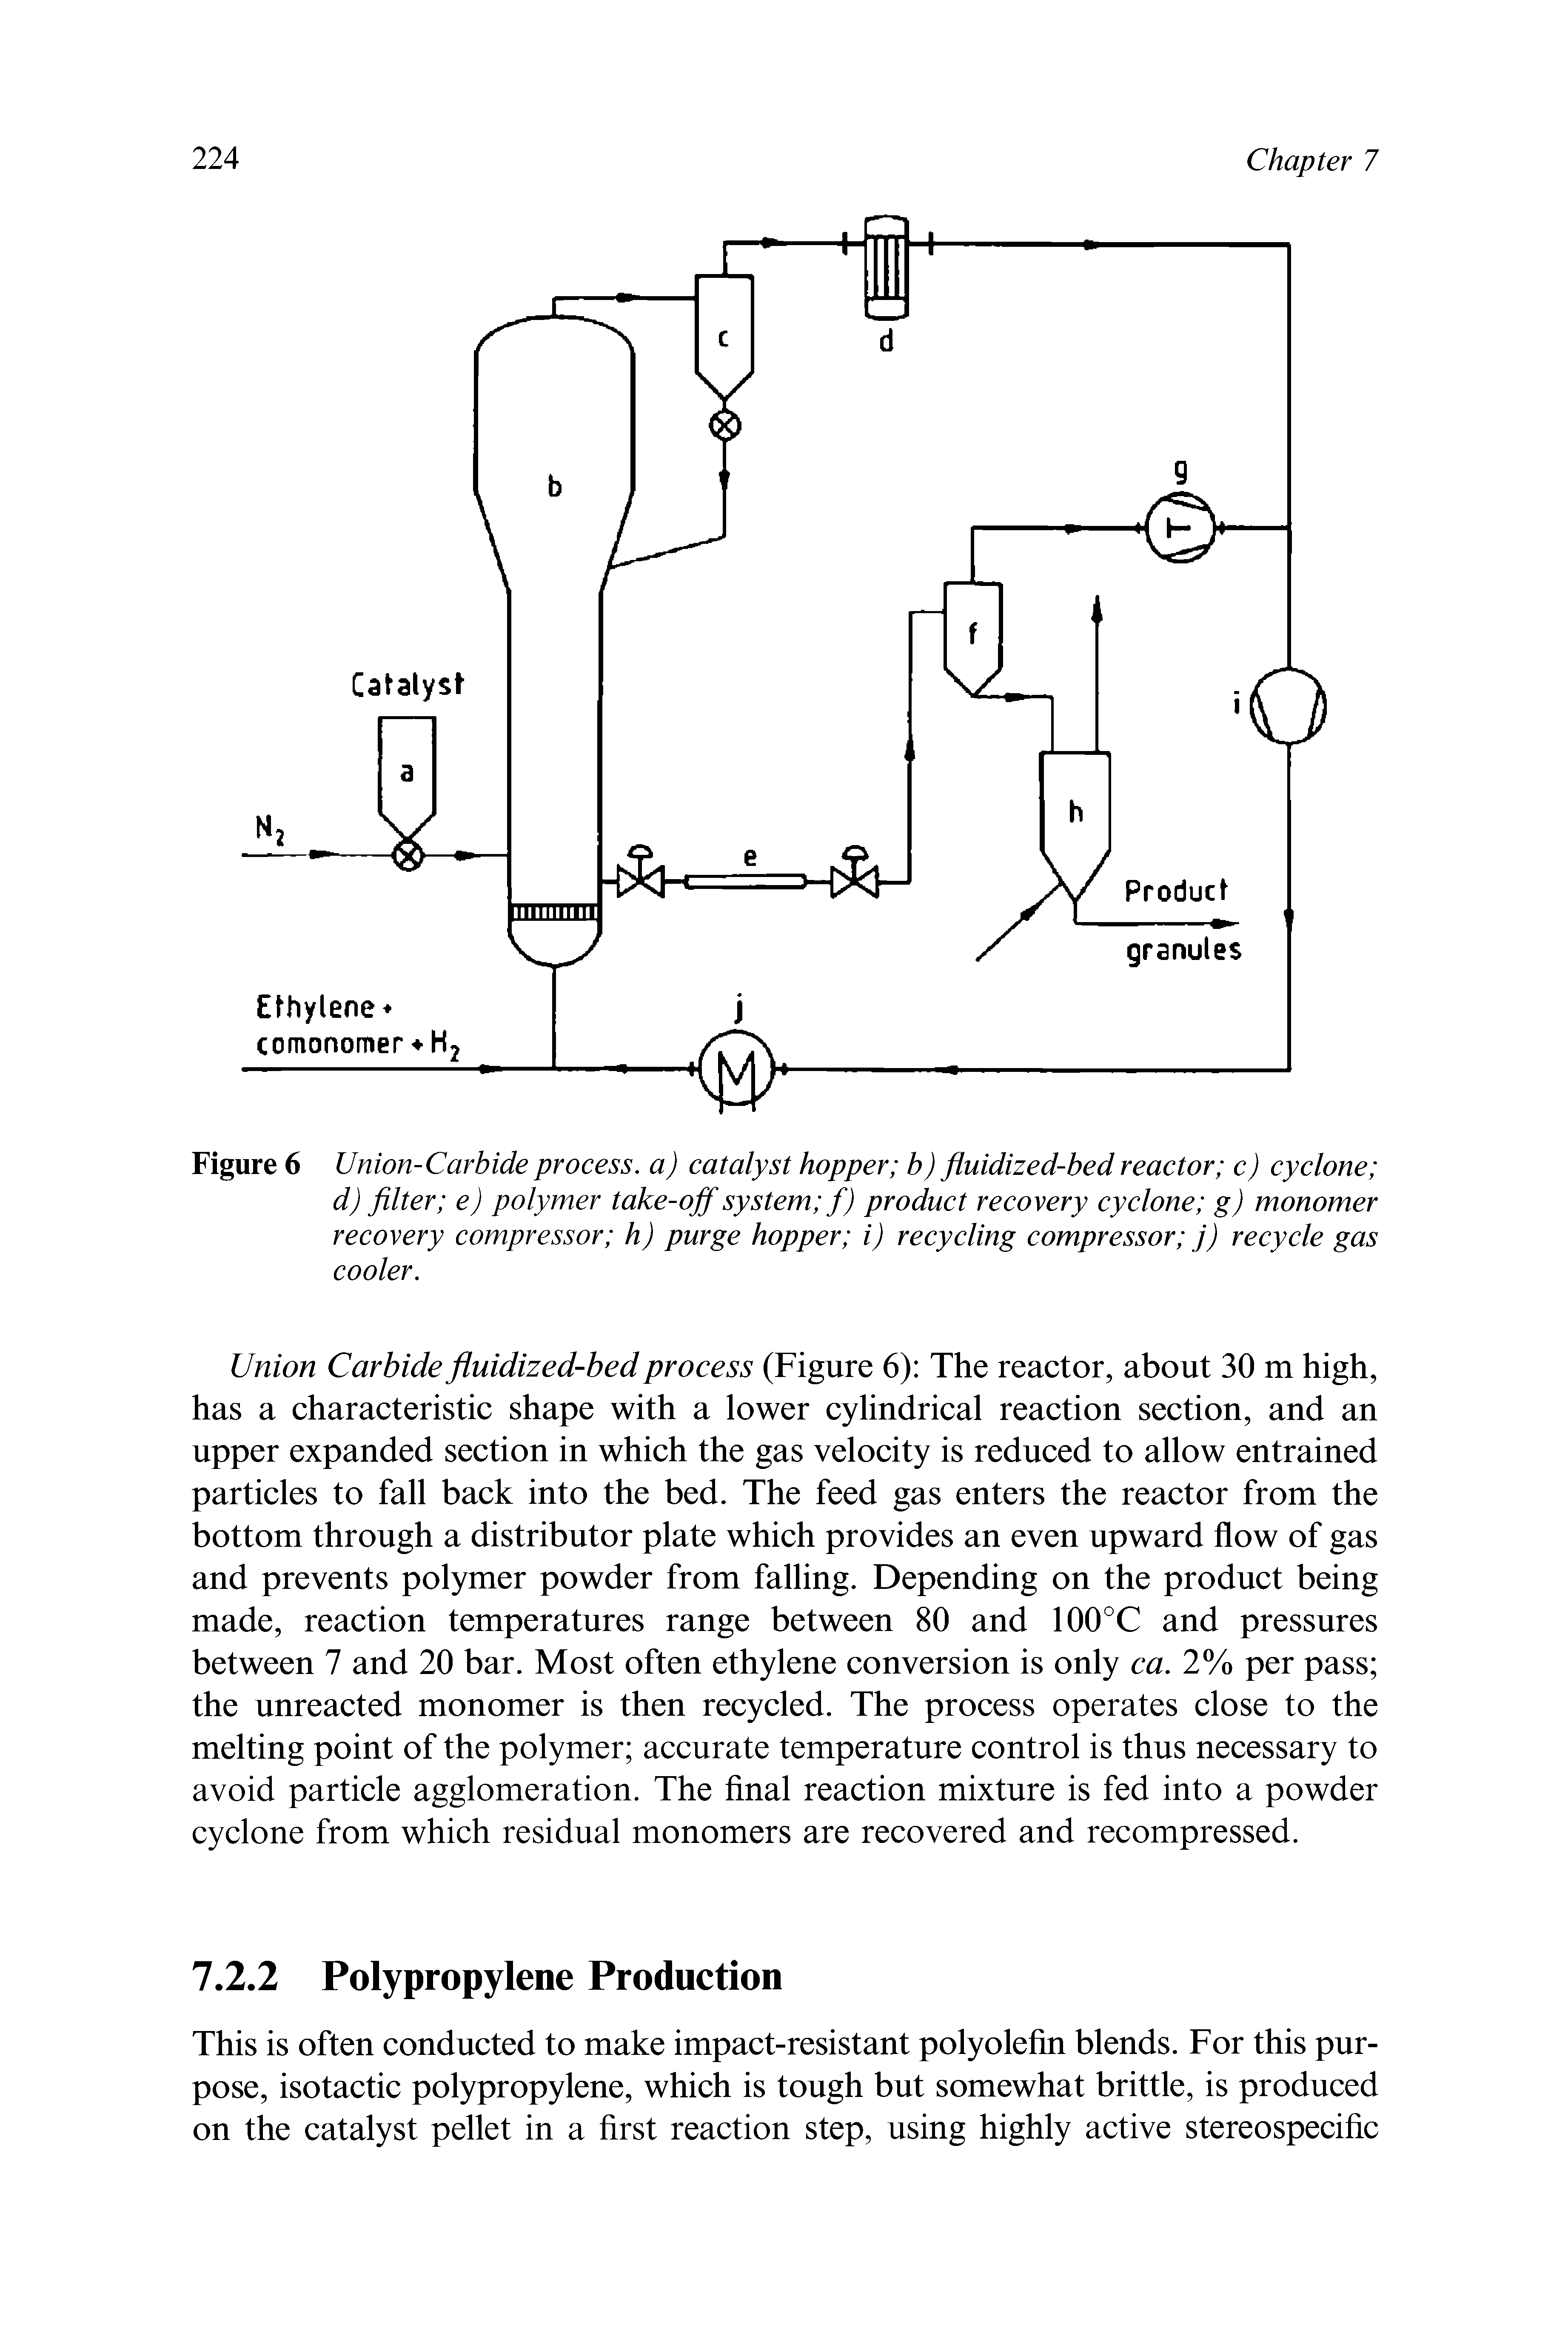 Figure 6 Union-Carbide process, a) catalyst hopper b) fluidized-bed reactor c) cyclone ...